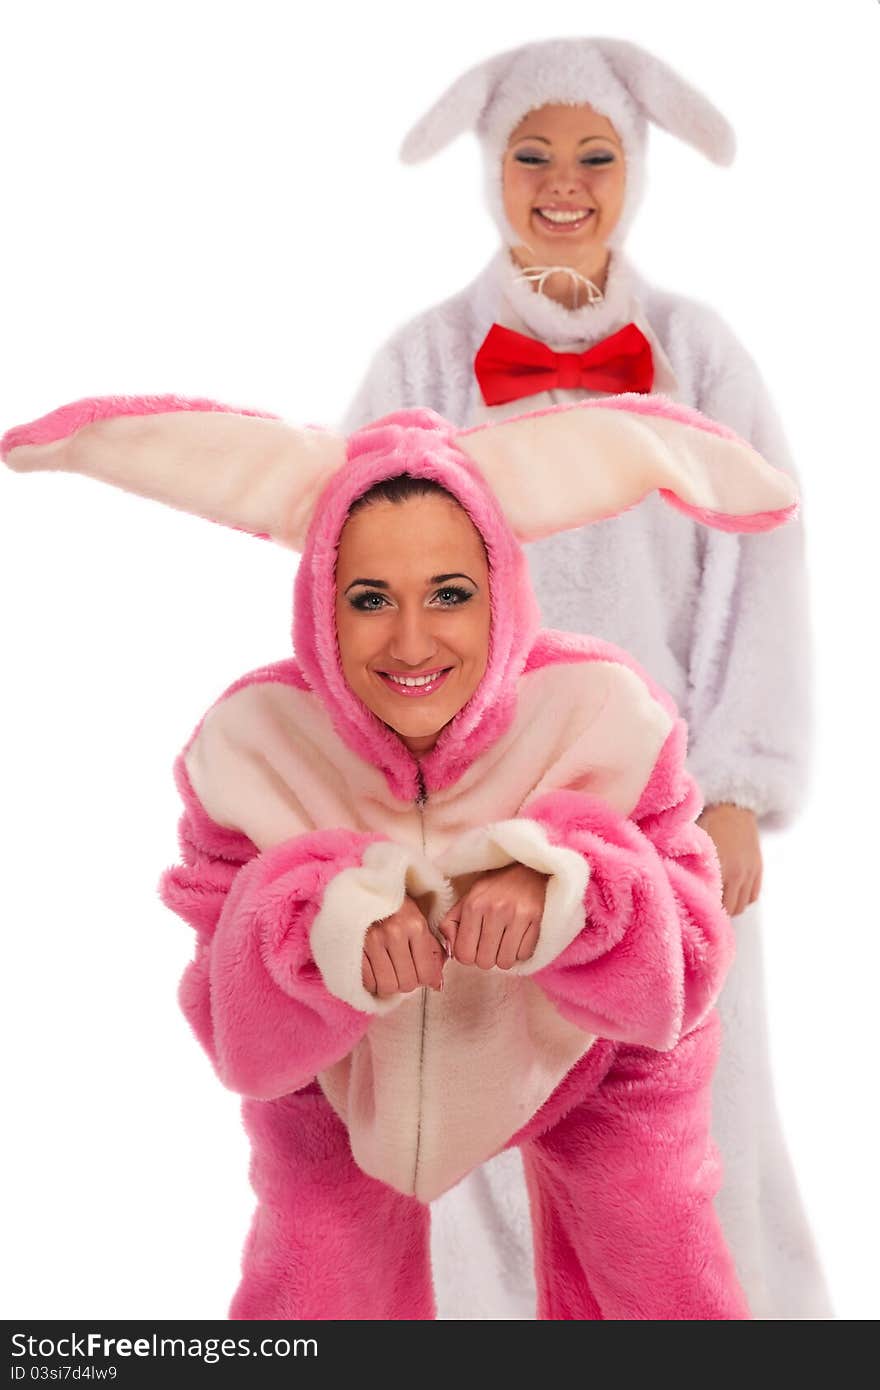 Funny pink rabbit against white rabbit isolated on white background. Funny pink rabbit against white rabbit isolated on white background